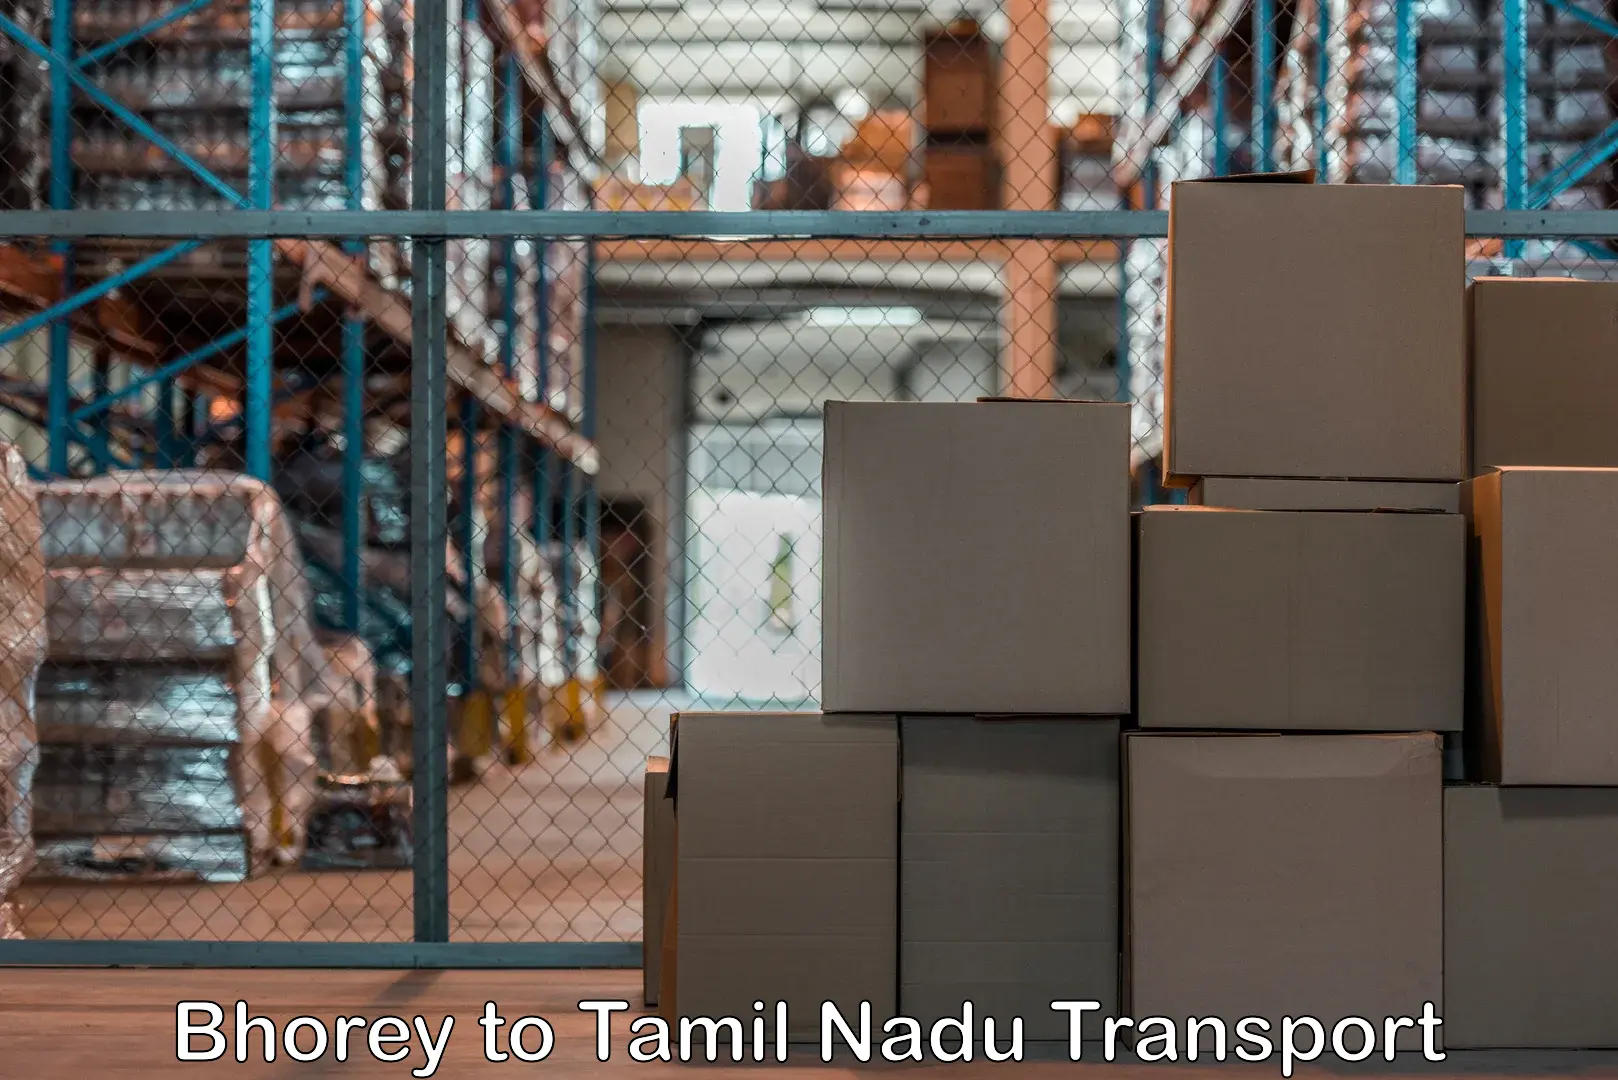 Nearby transport service Bhorey to Tamil Nadu